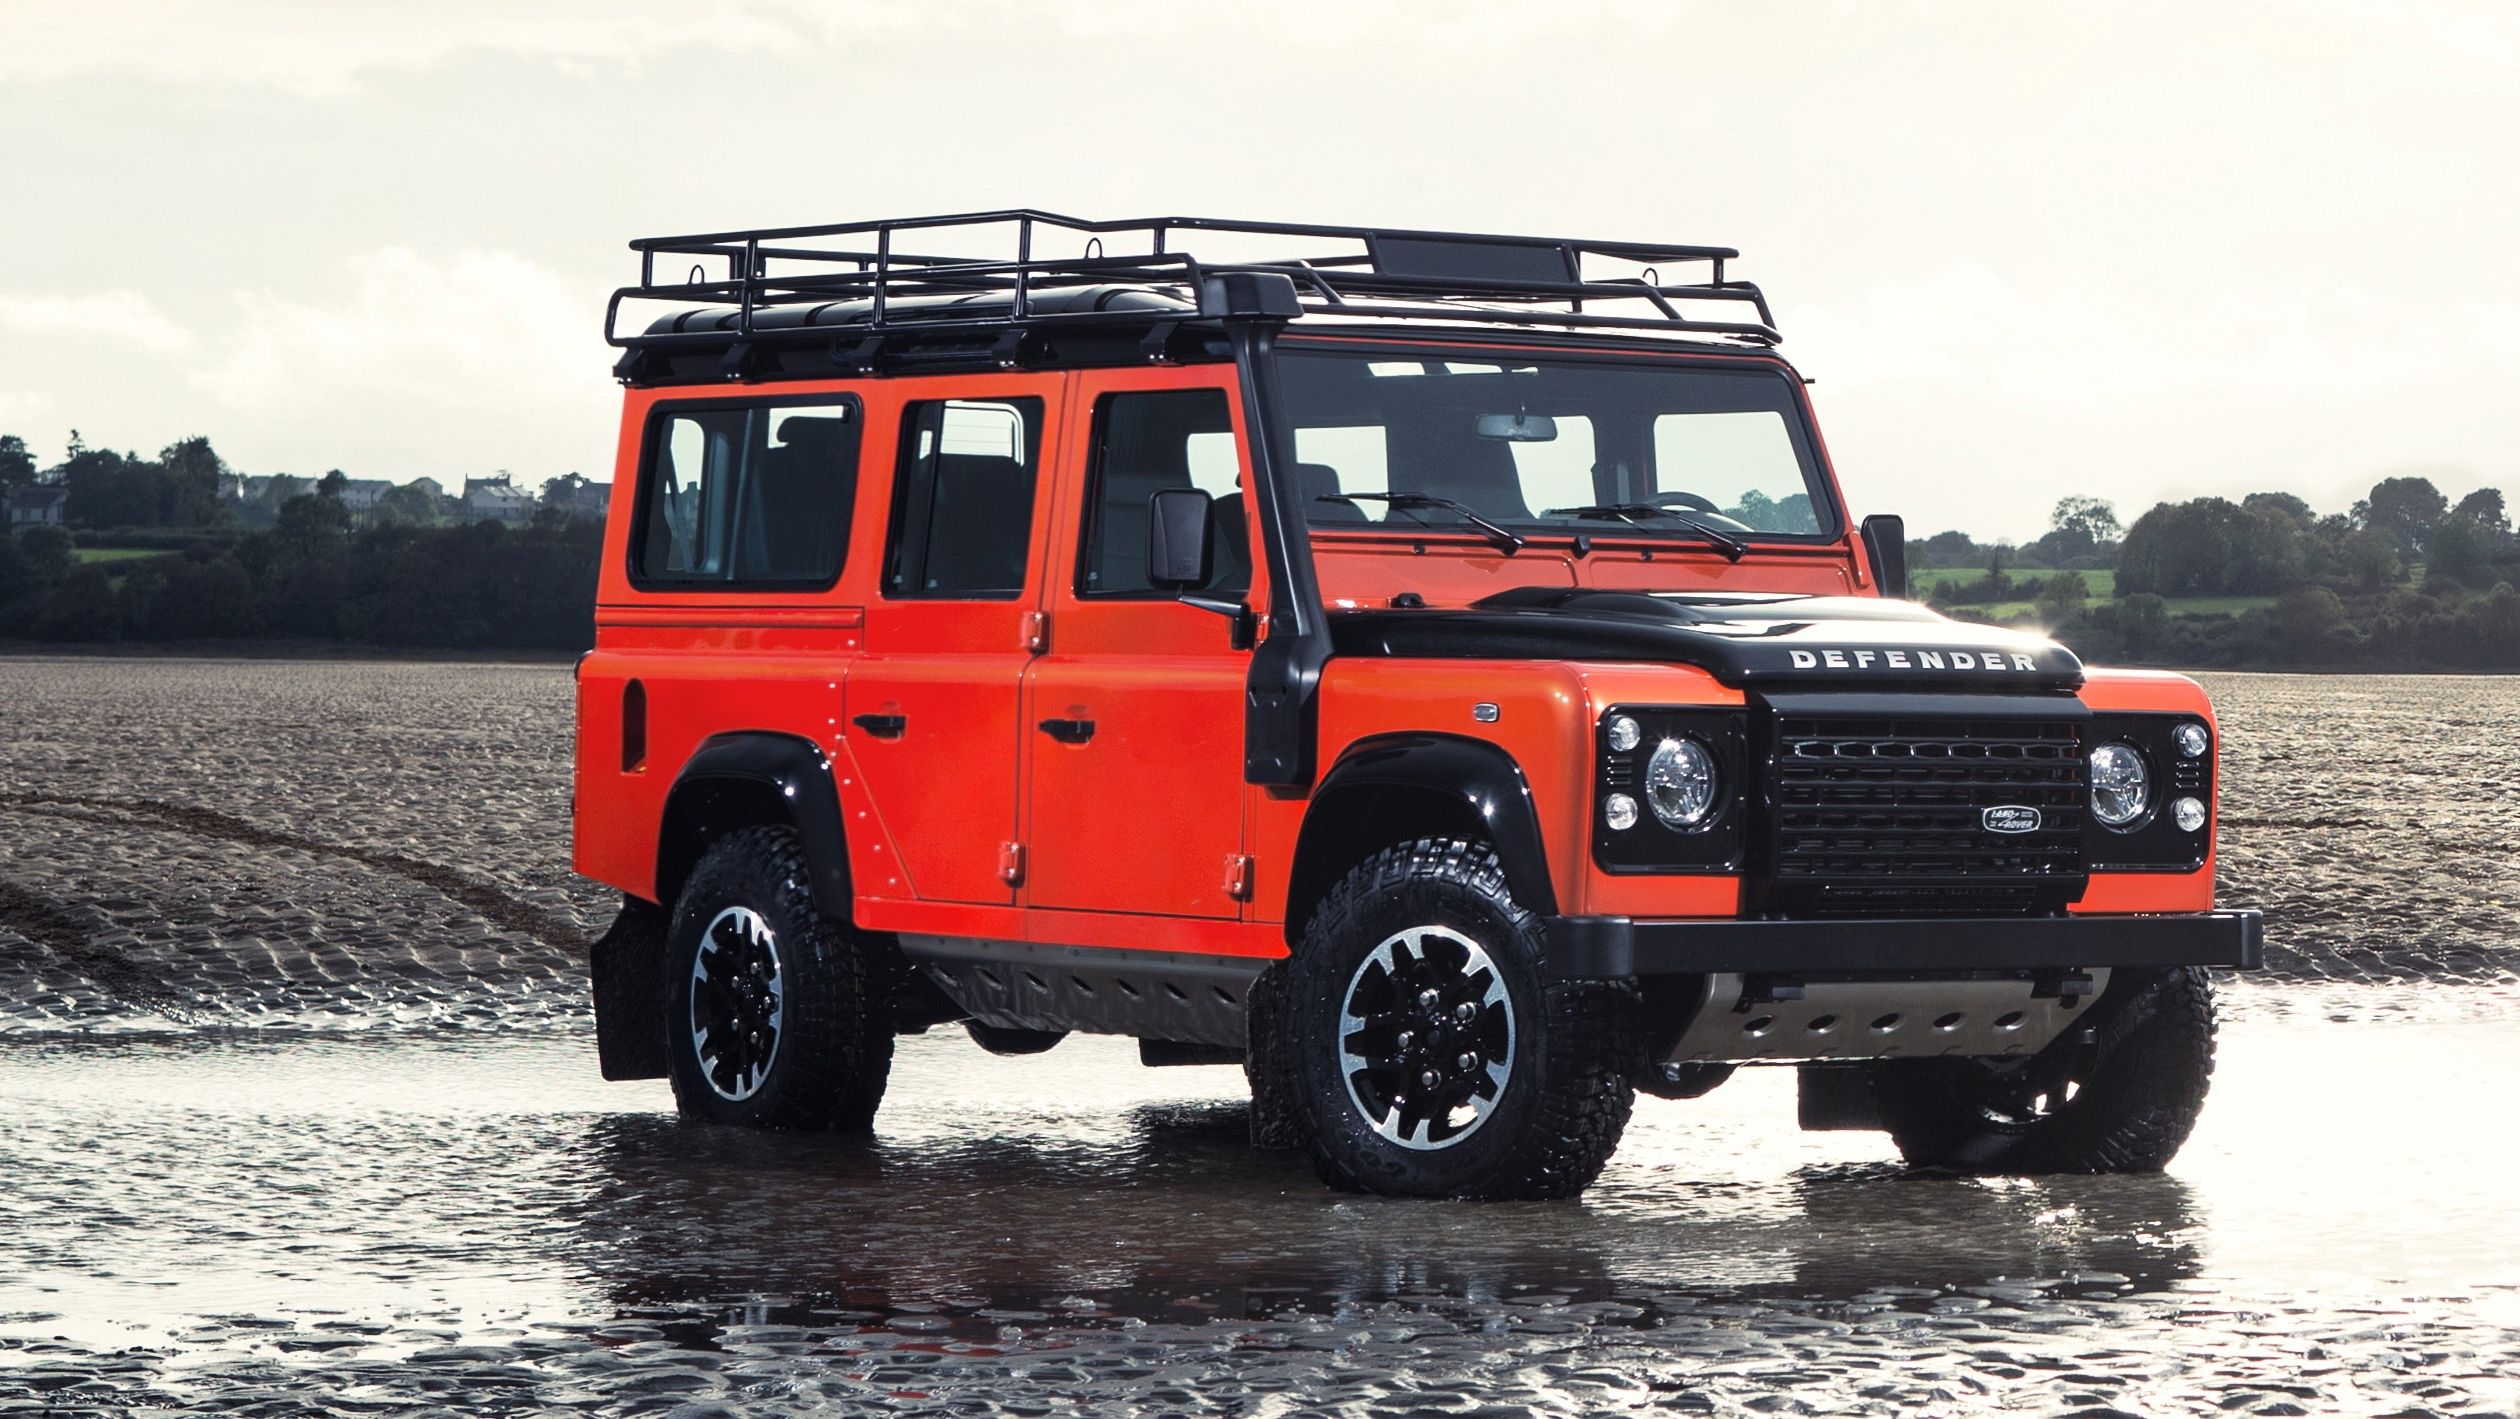 inleveren veelbelovend presentatie 2015 Land Rover Defender Adventure Edition